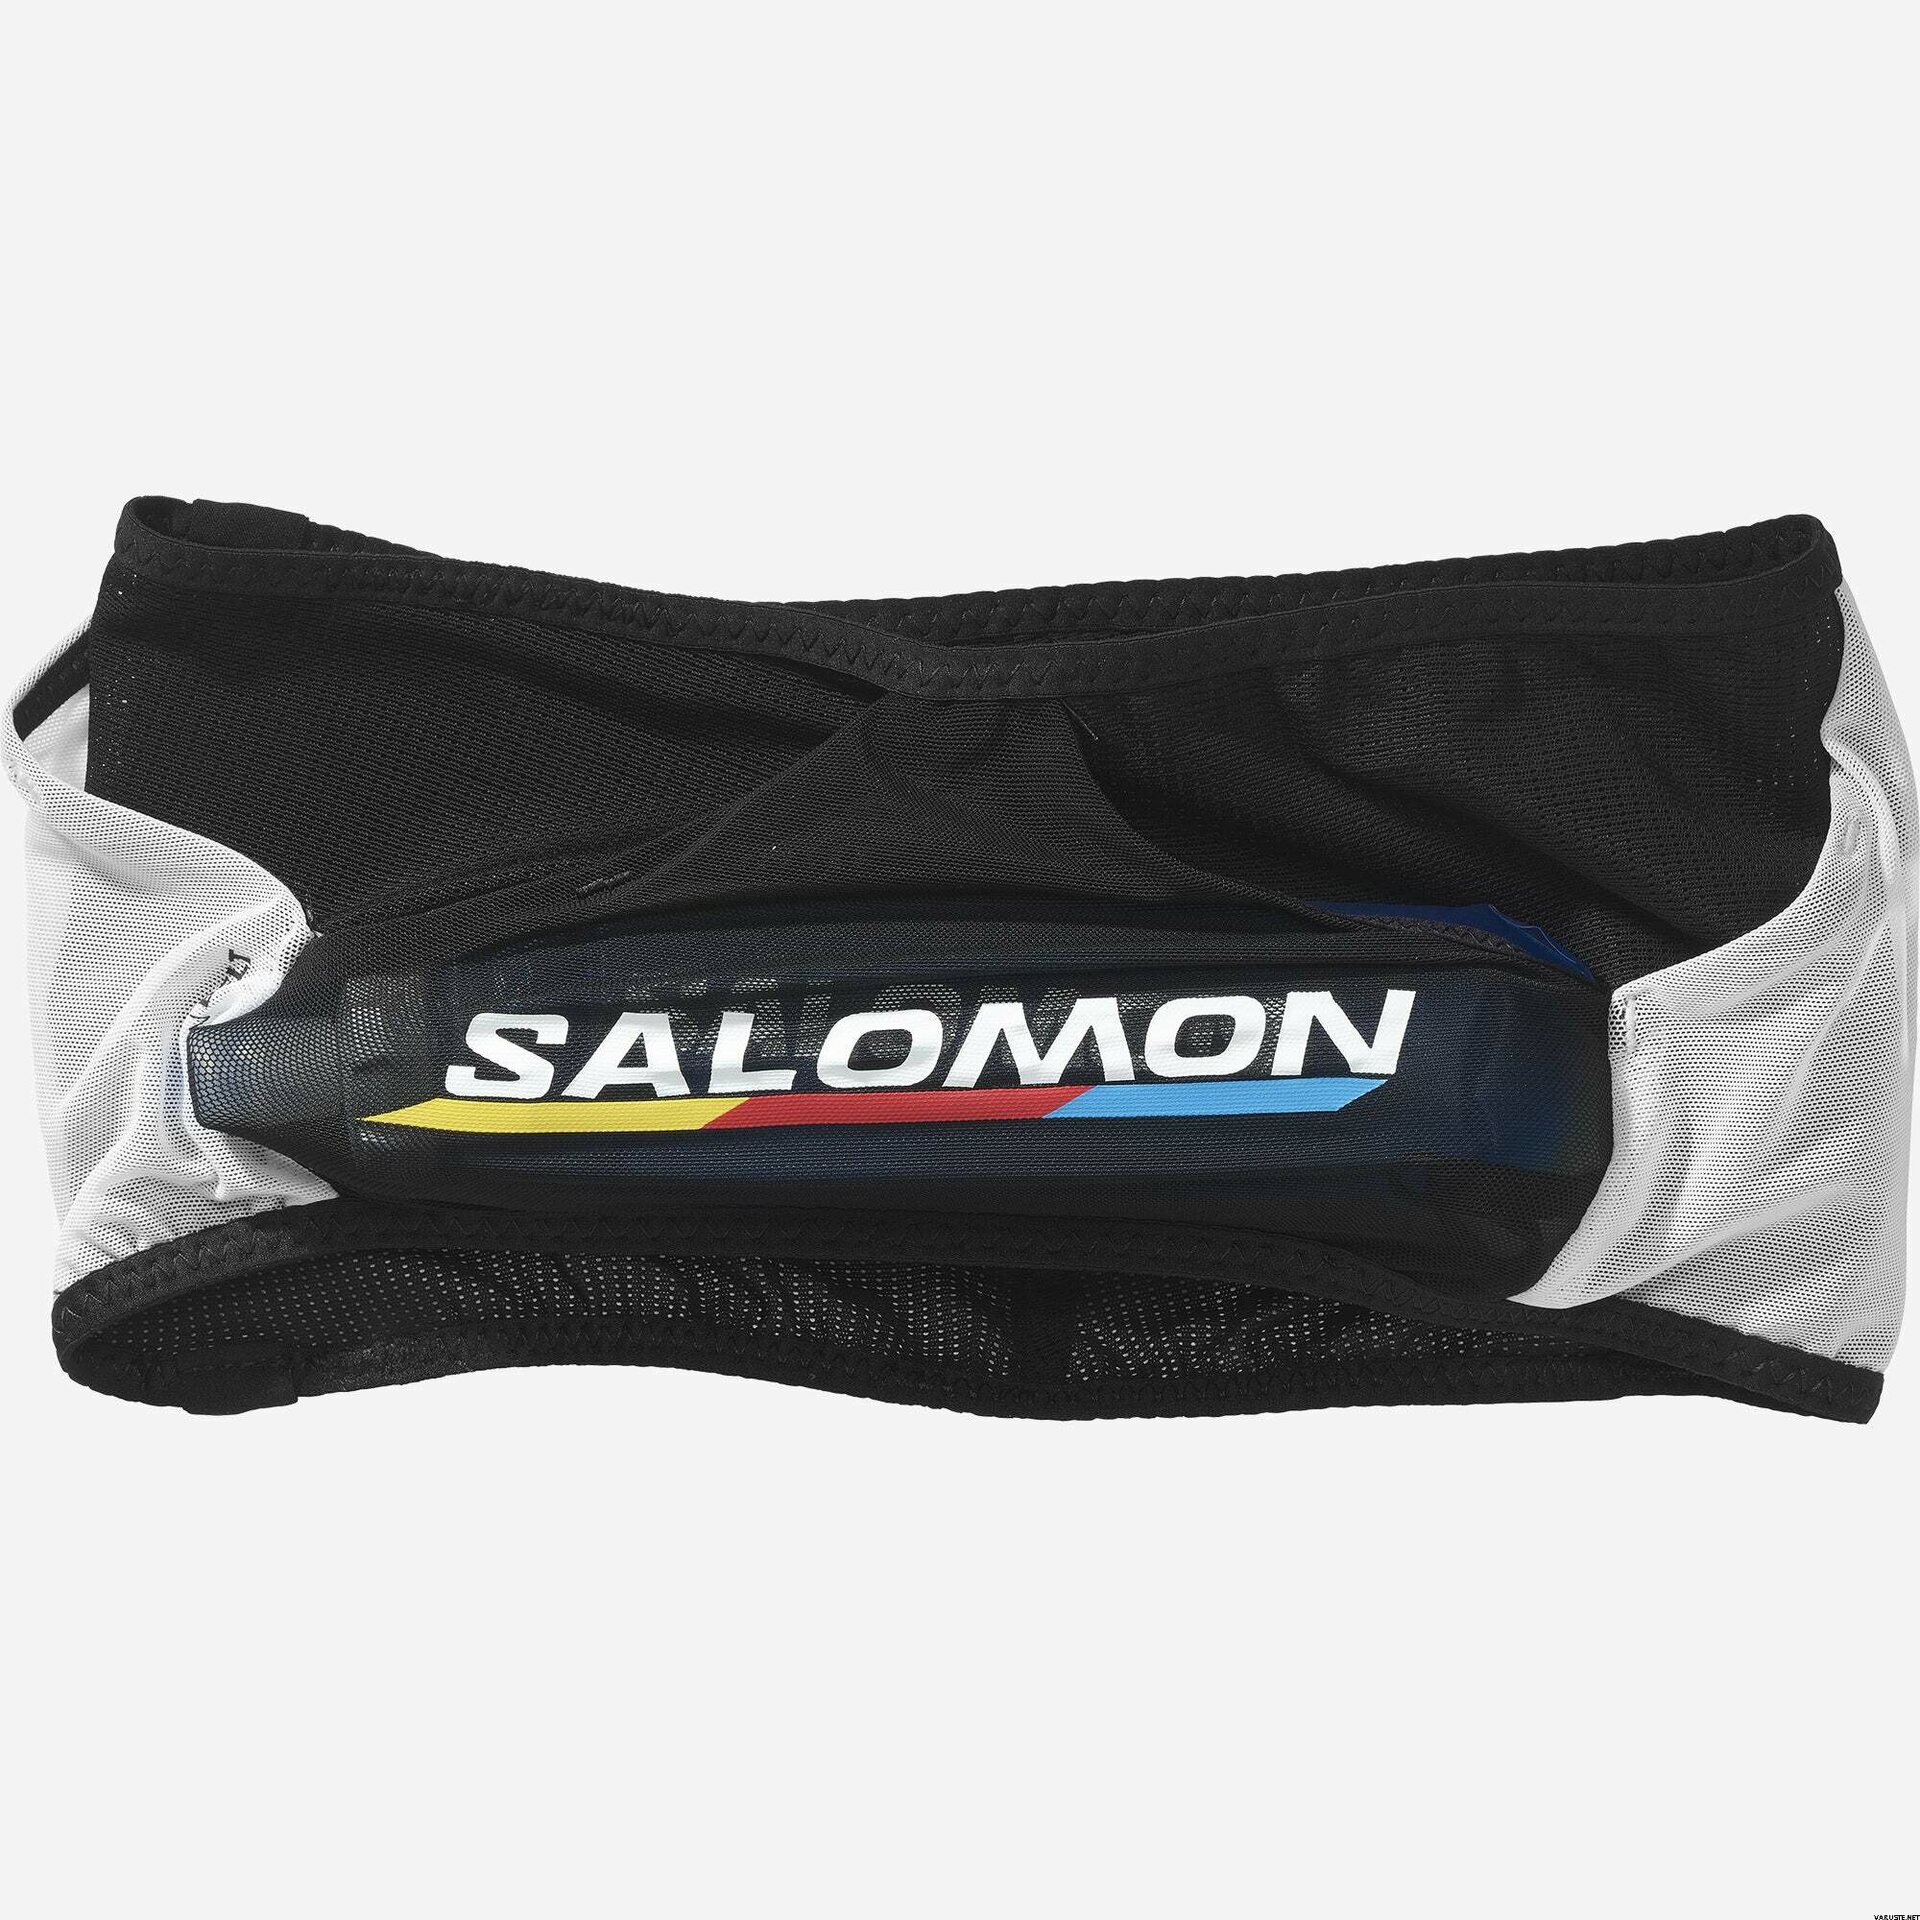 Salomon Adv Skin Belt Race Flag | Belt pockets | Varuste.net Русский